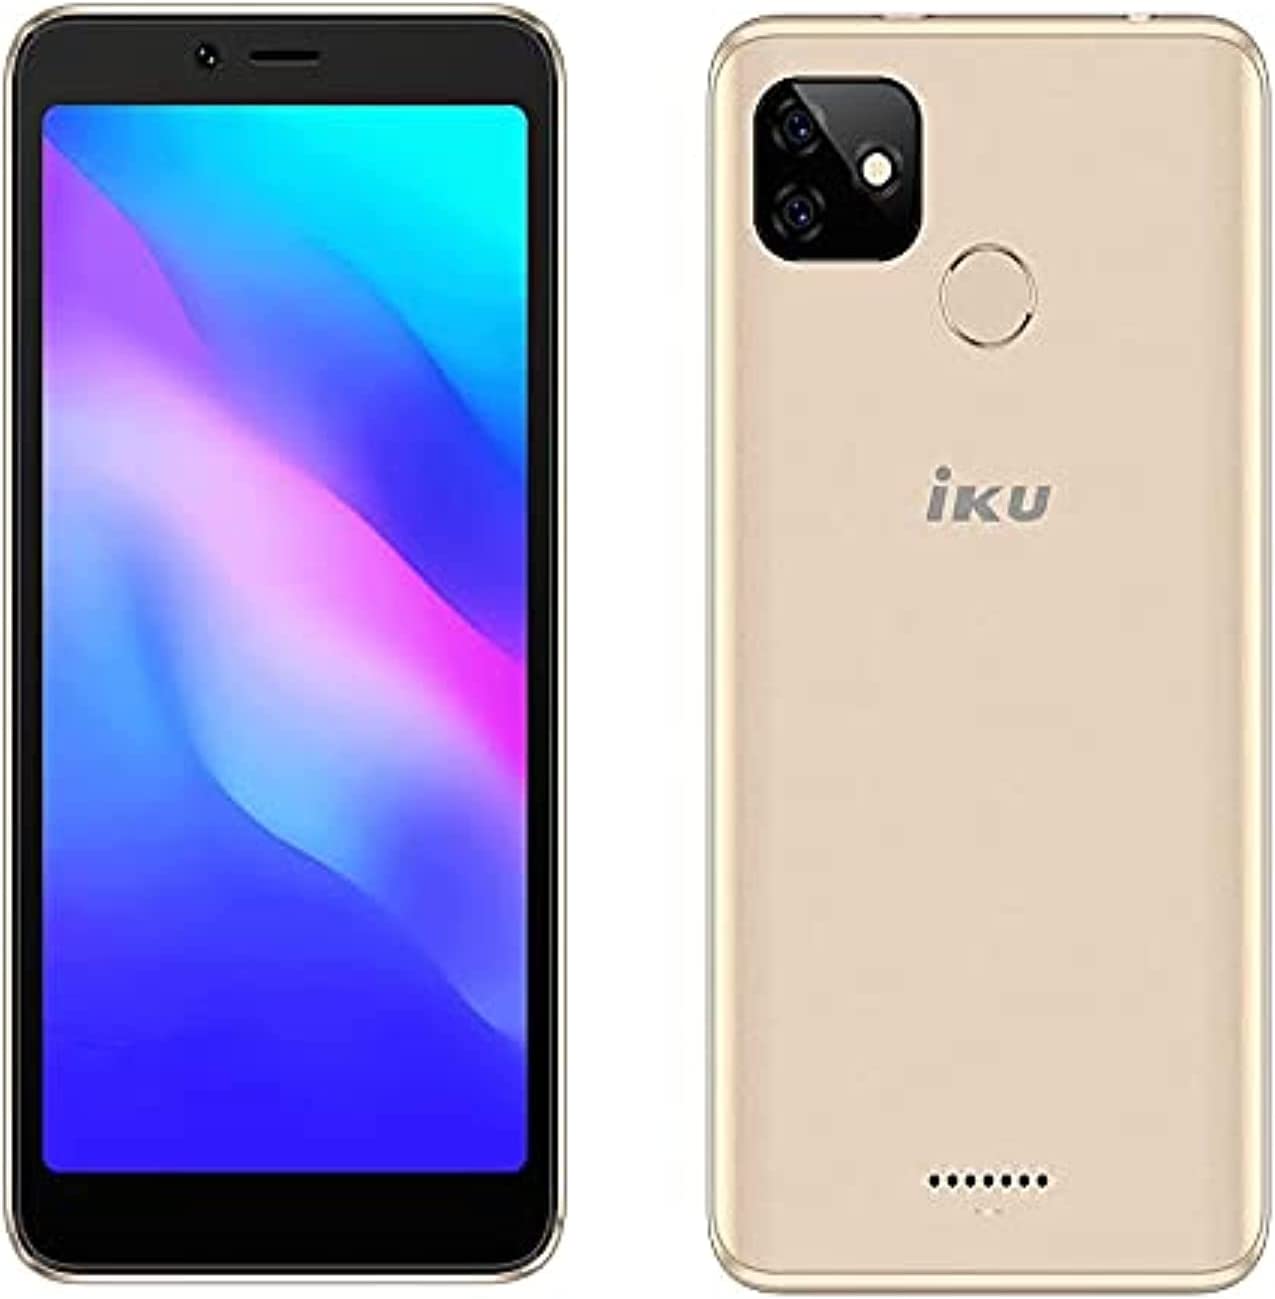 IKU A6, 32GB, 1GB RAM, Dual SIM, 3G LTE - Gold